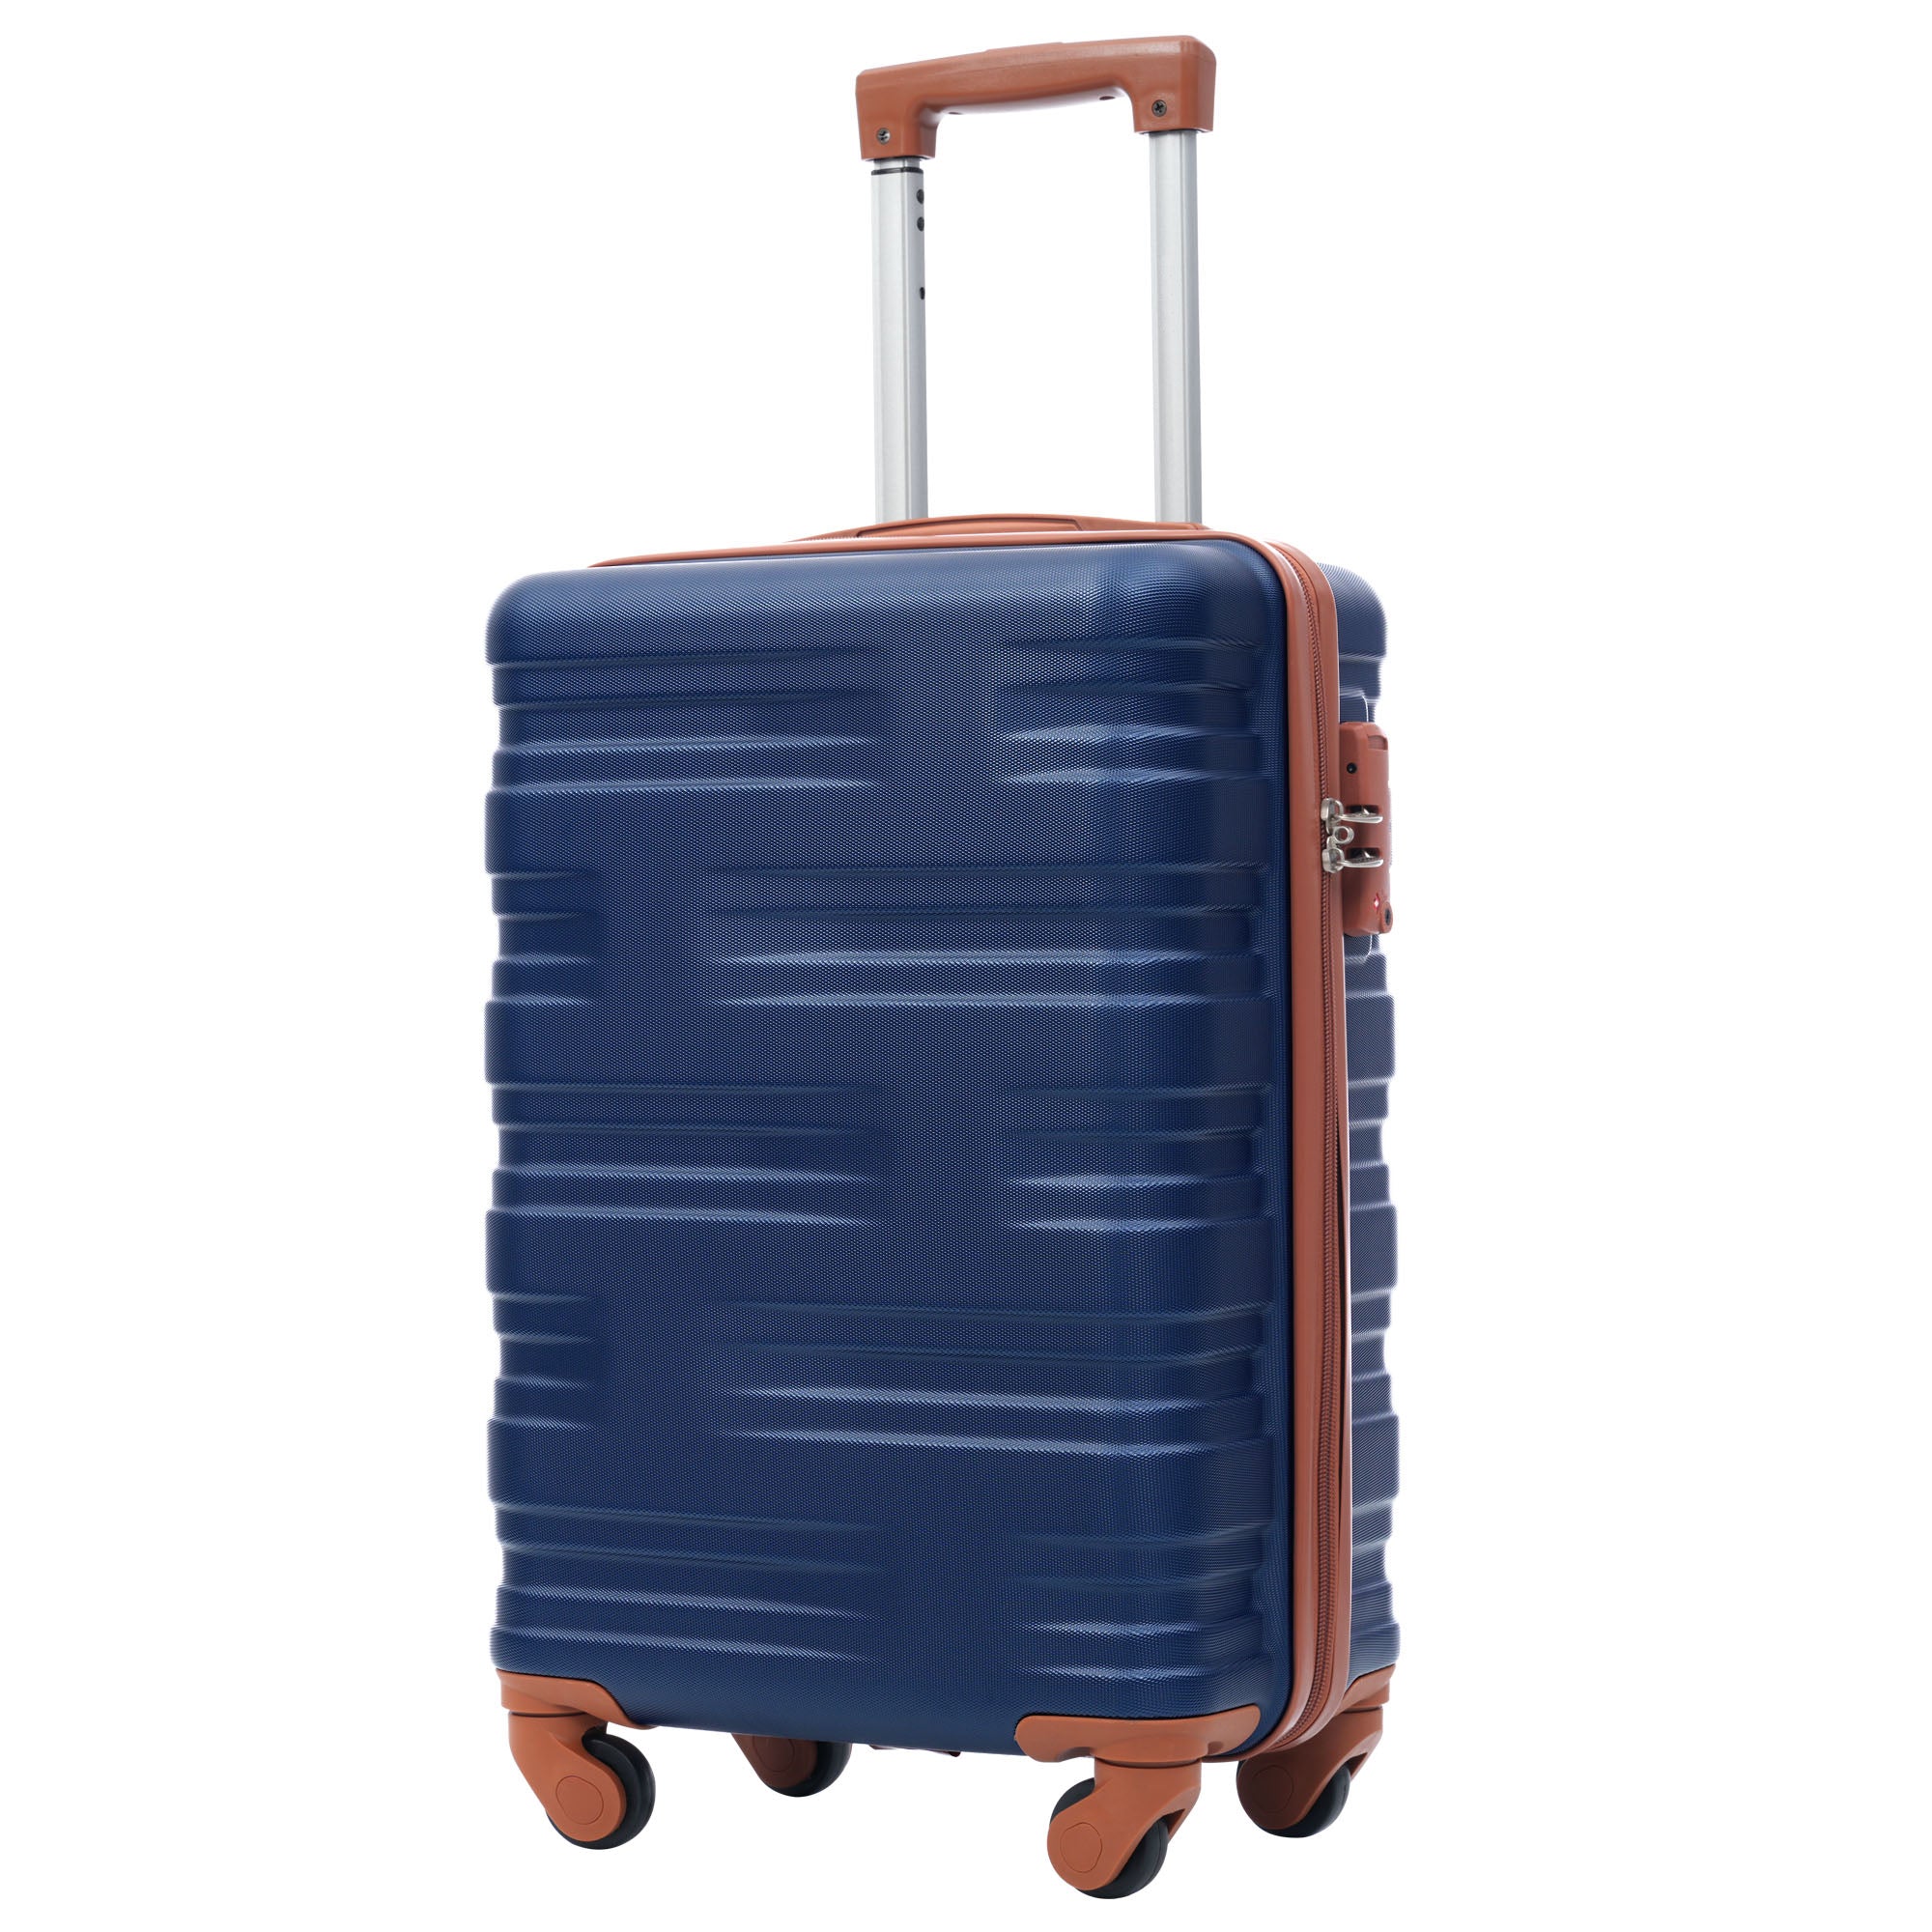 Merax Luggage with TSA Lock Spinner Wheels Hardside